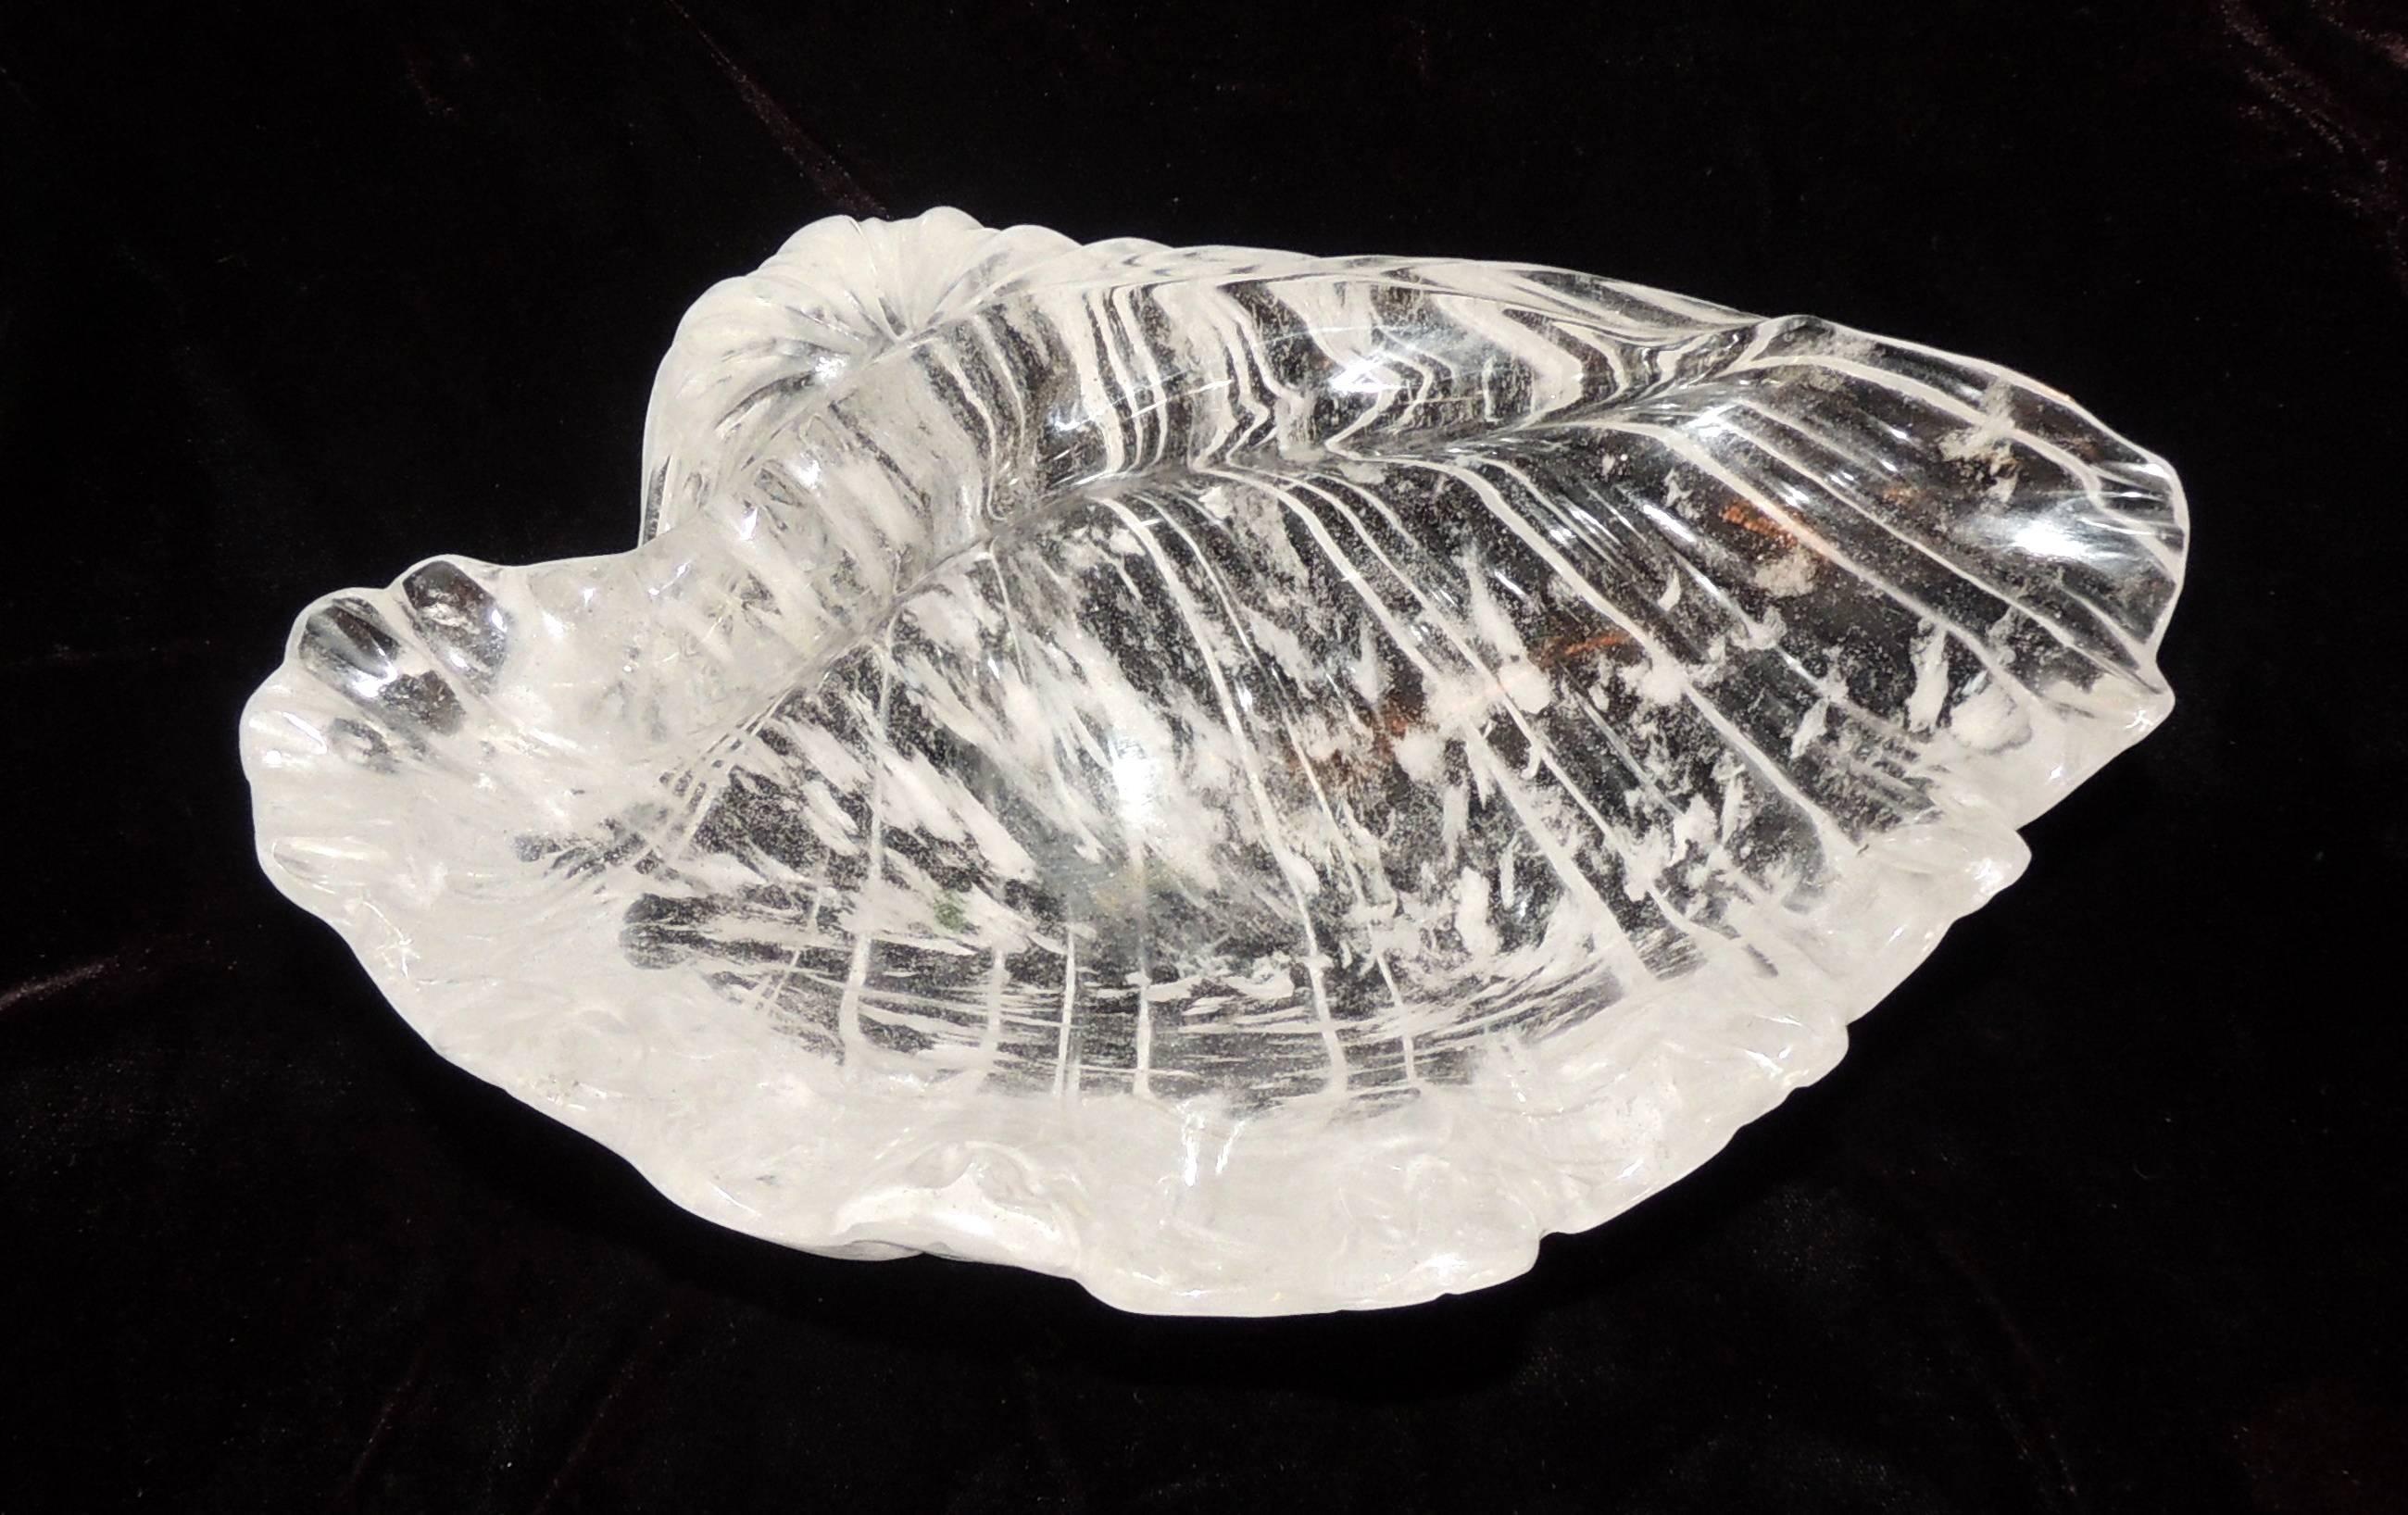 Italian Wonderful Carved/Cut Rock Crystal Sea Shell Form Sculpture Bowl Centerpiece